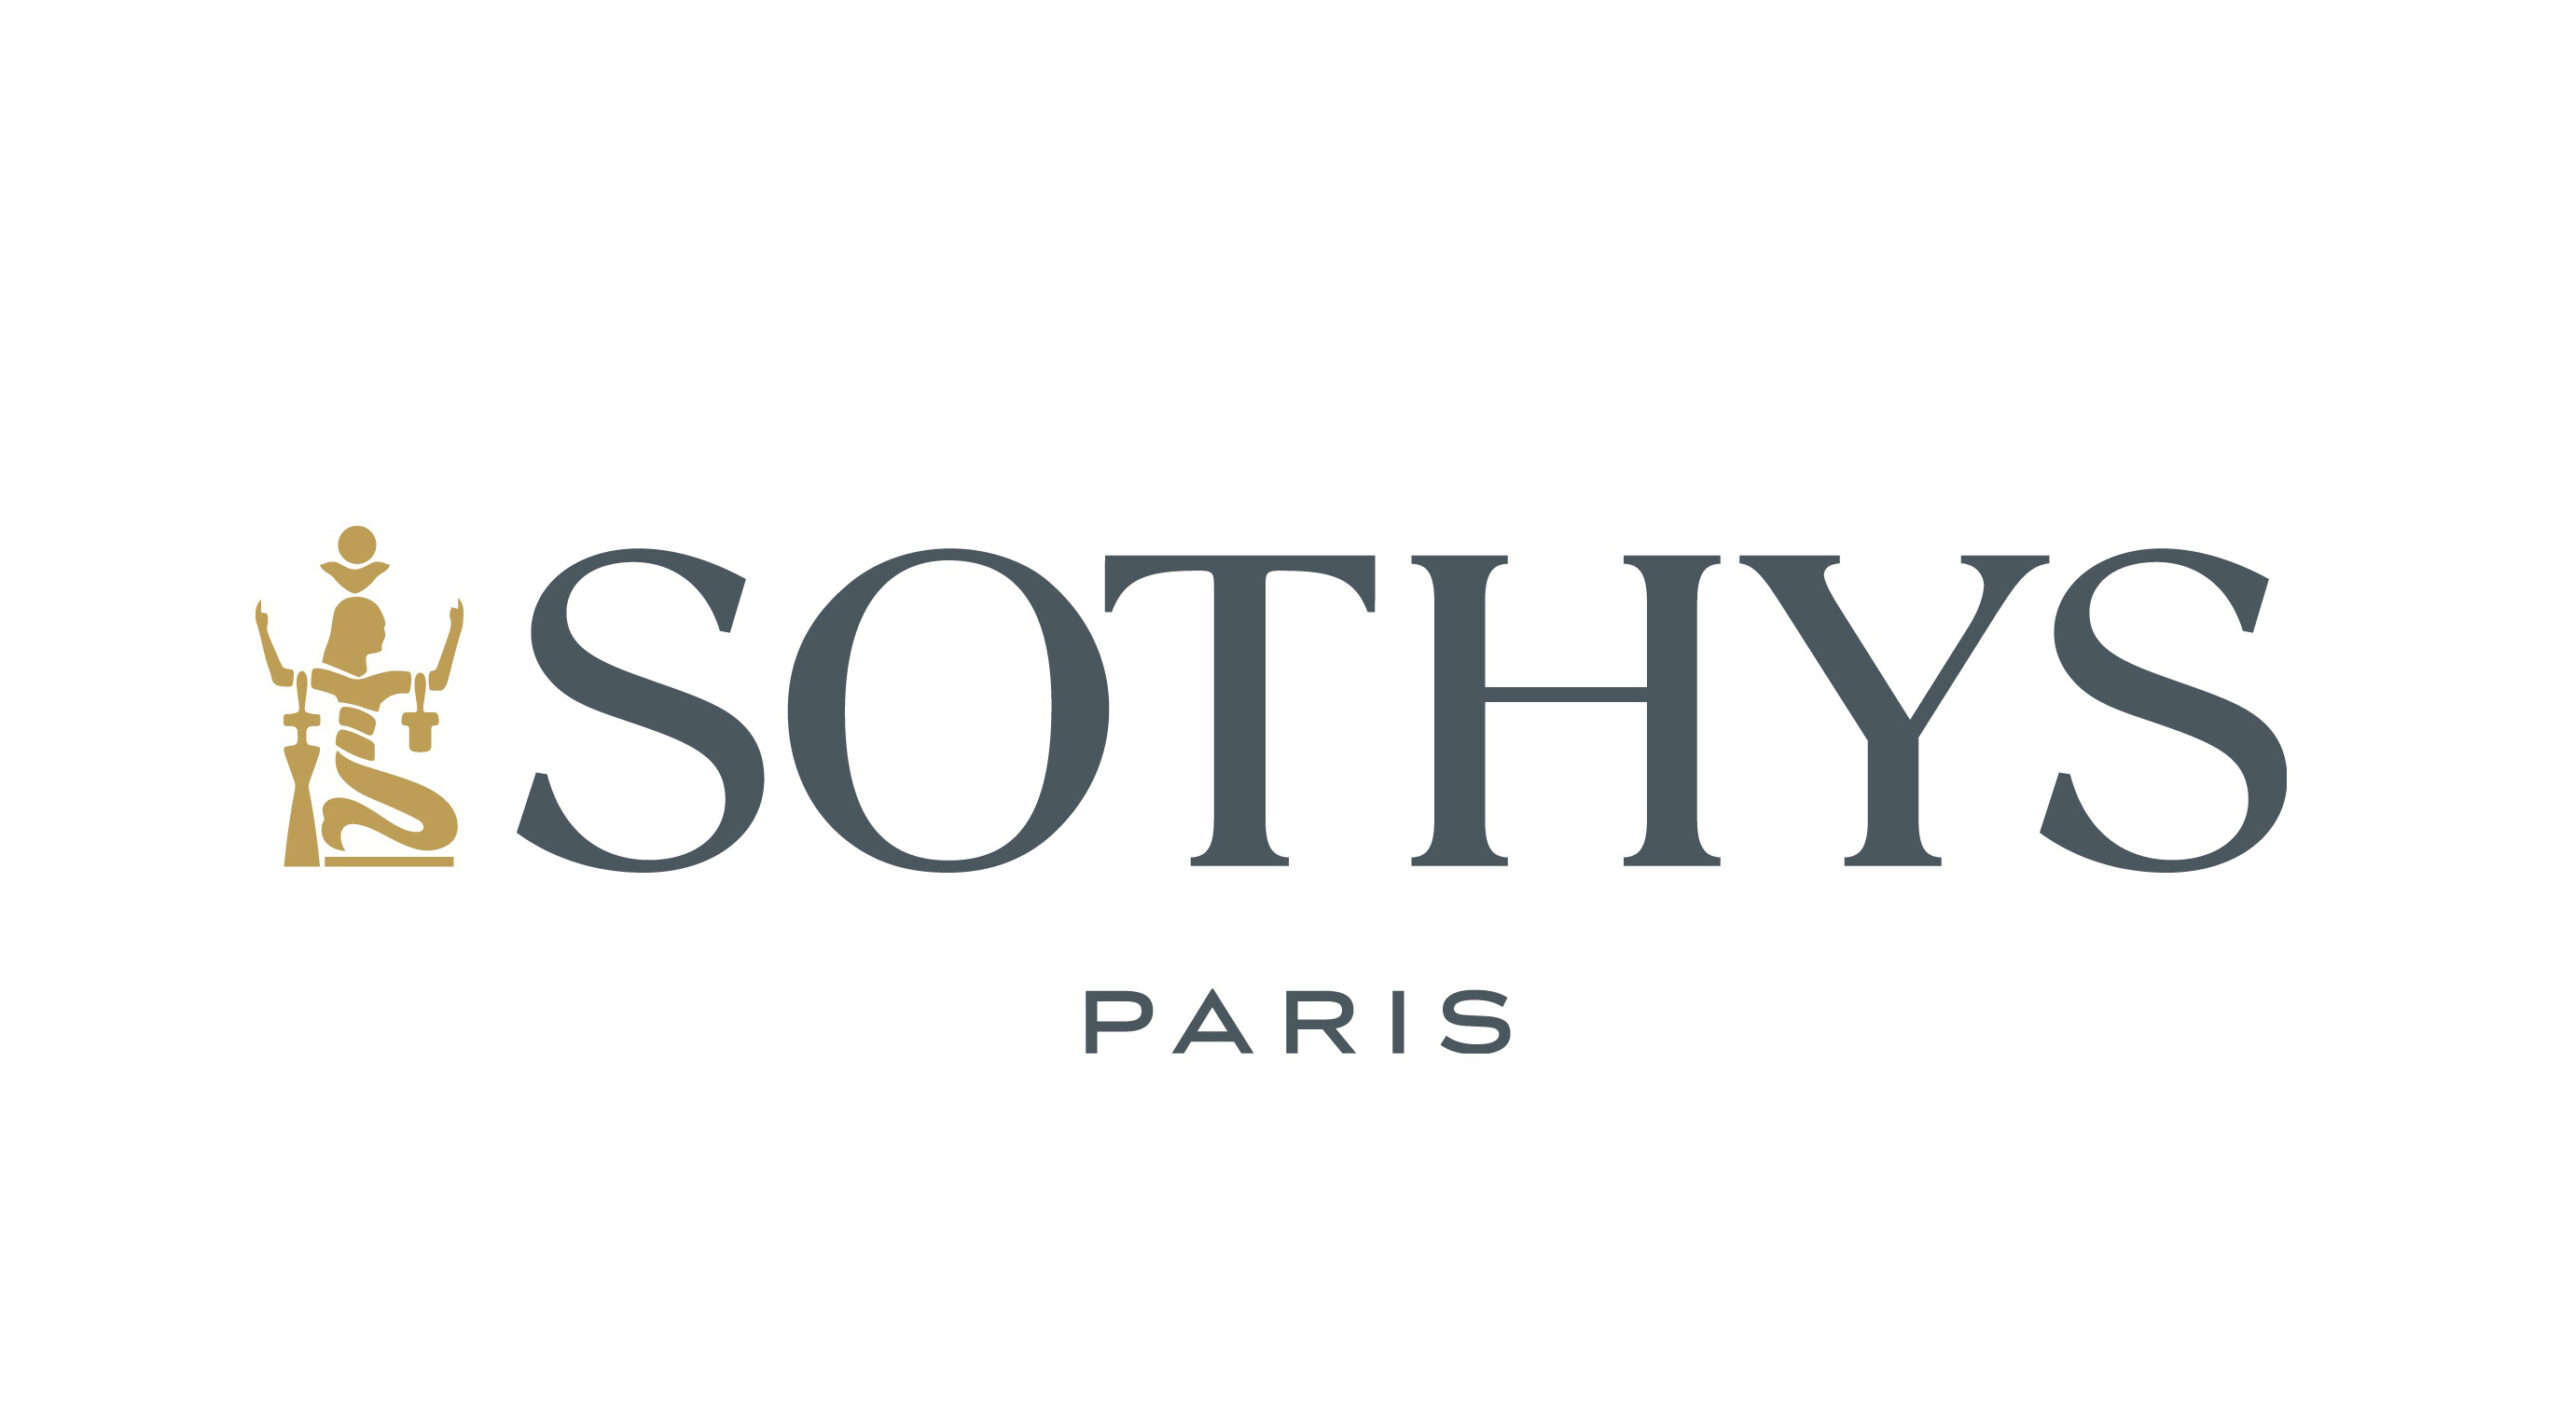 Sothys_logo